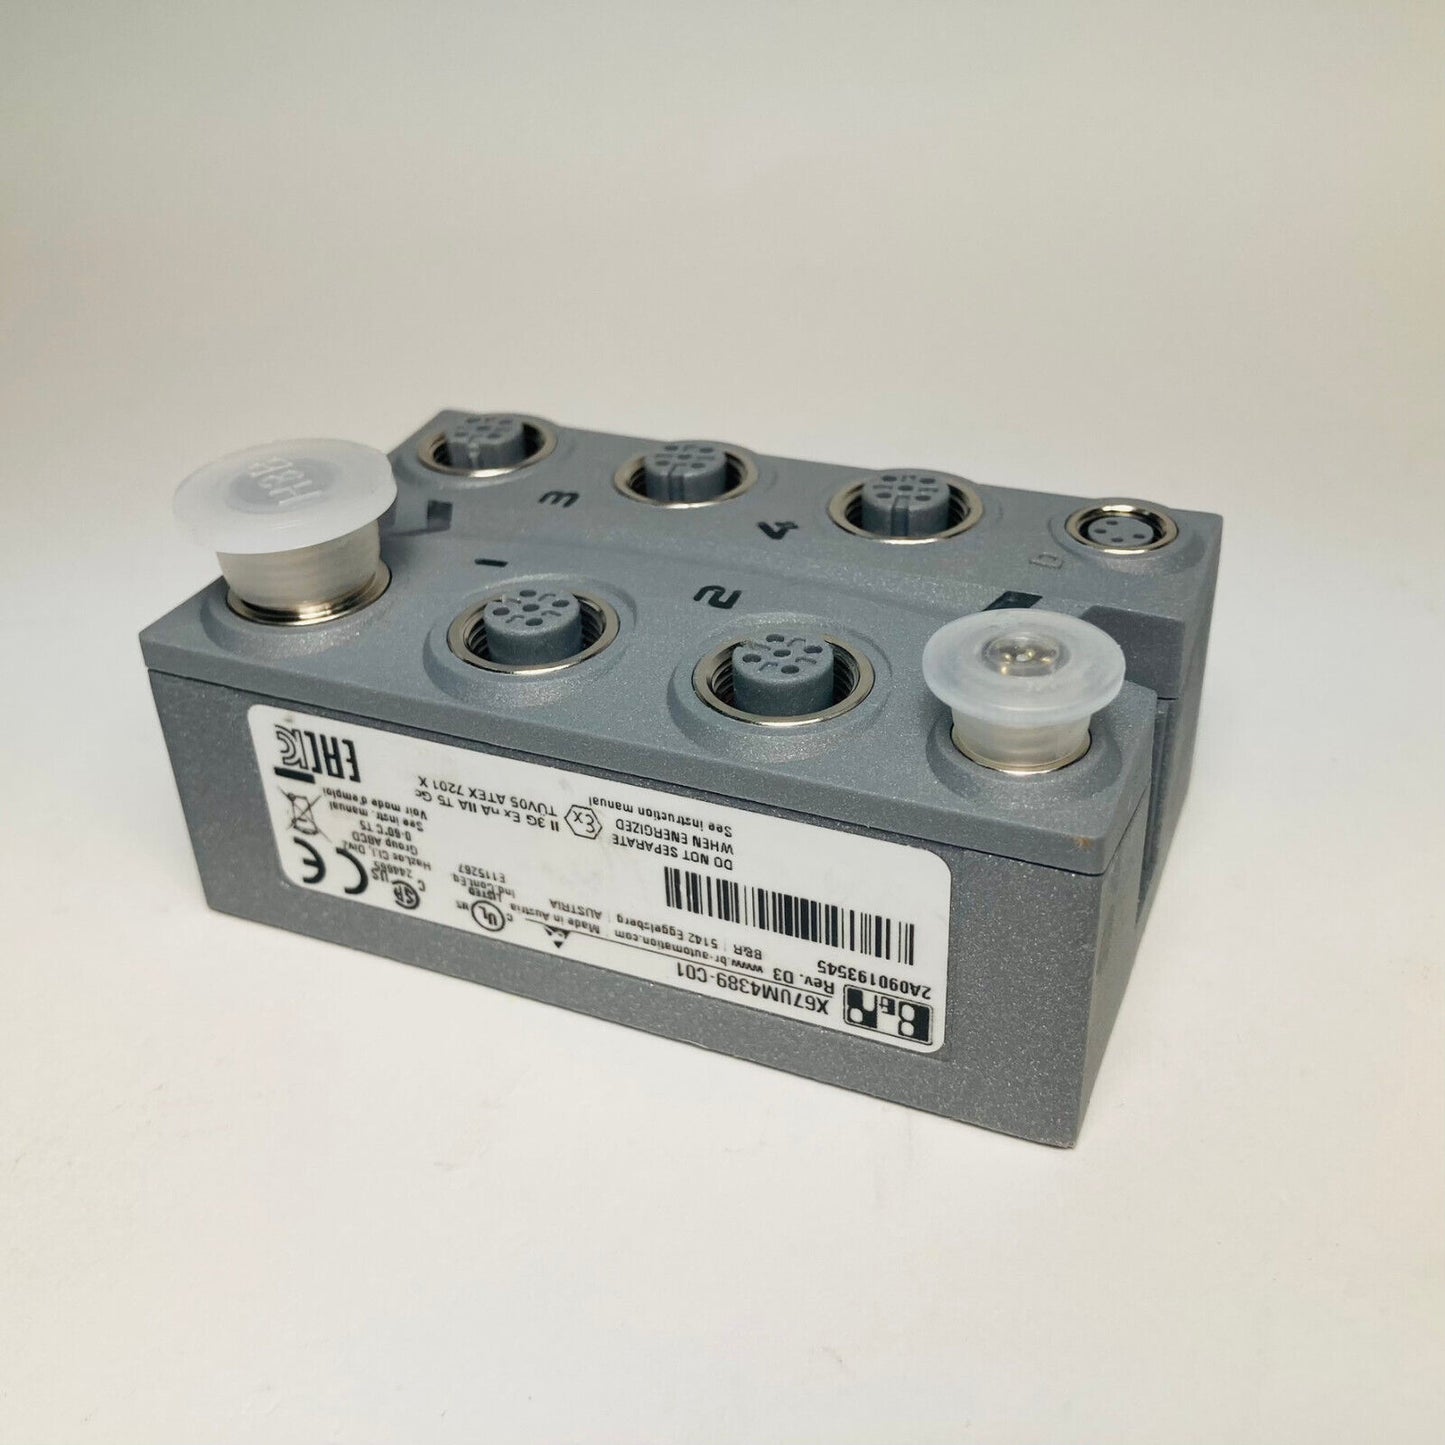 B&R X67UM4389-C01 Power Supply, New no box